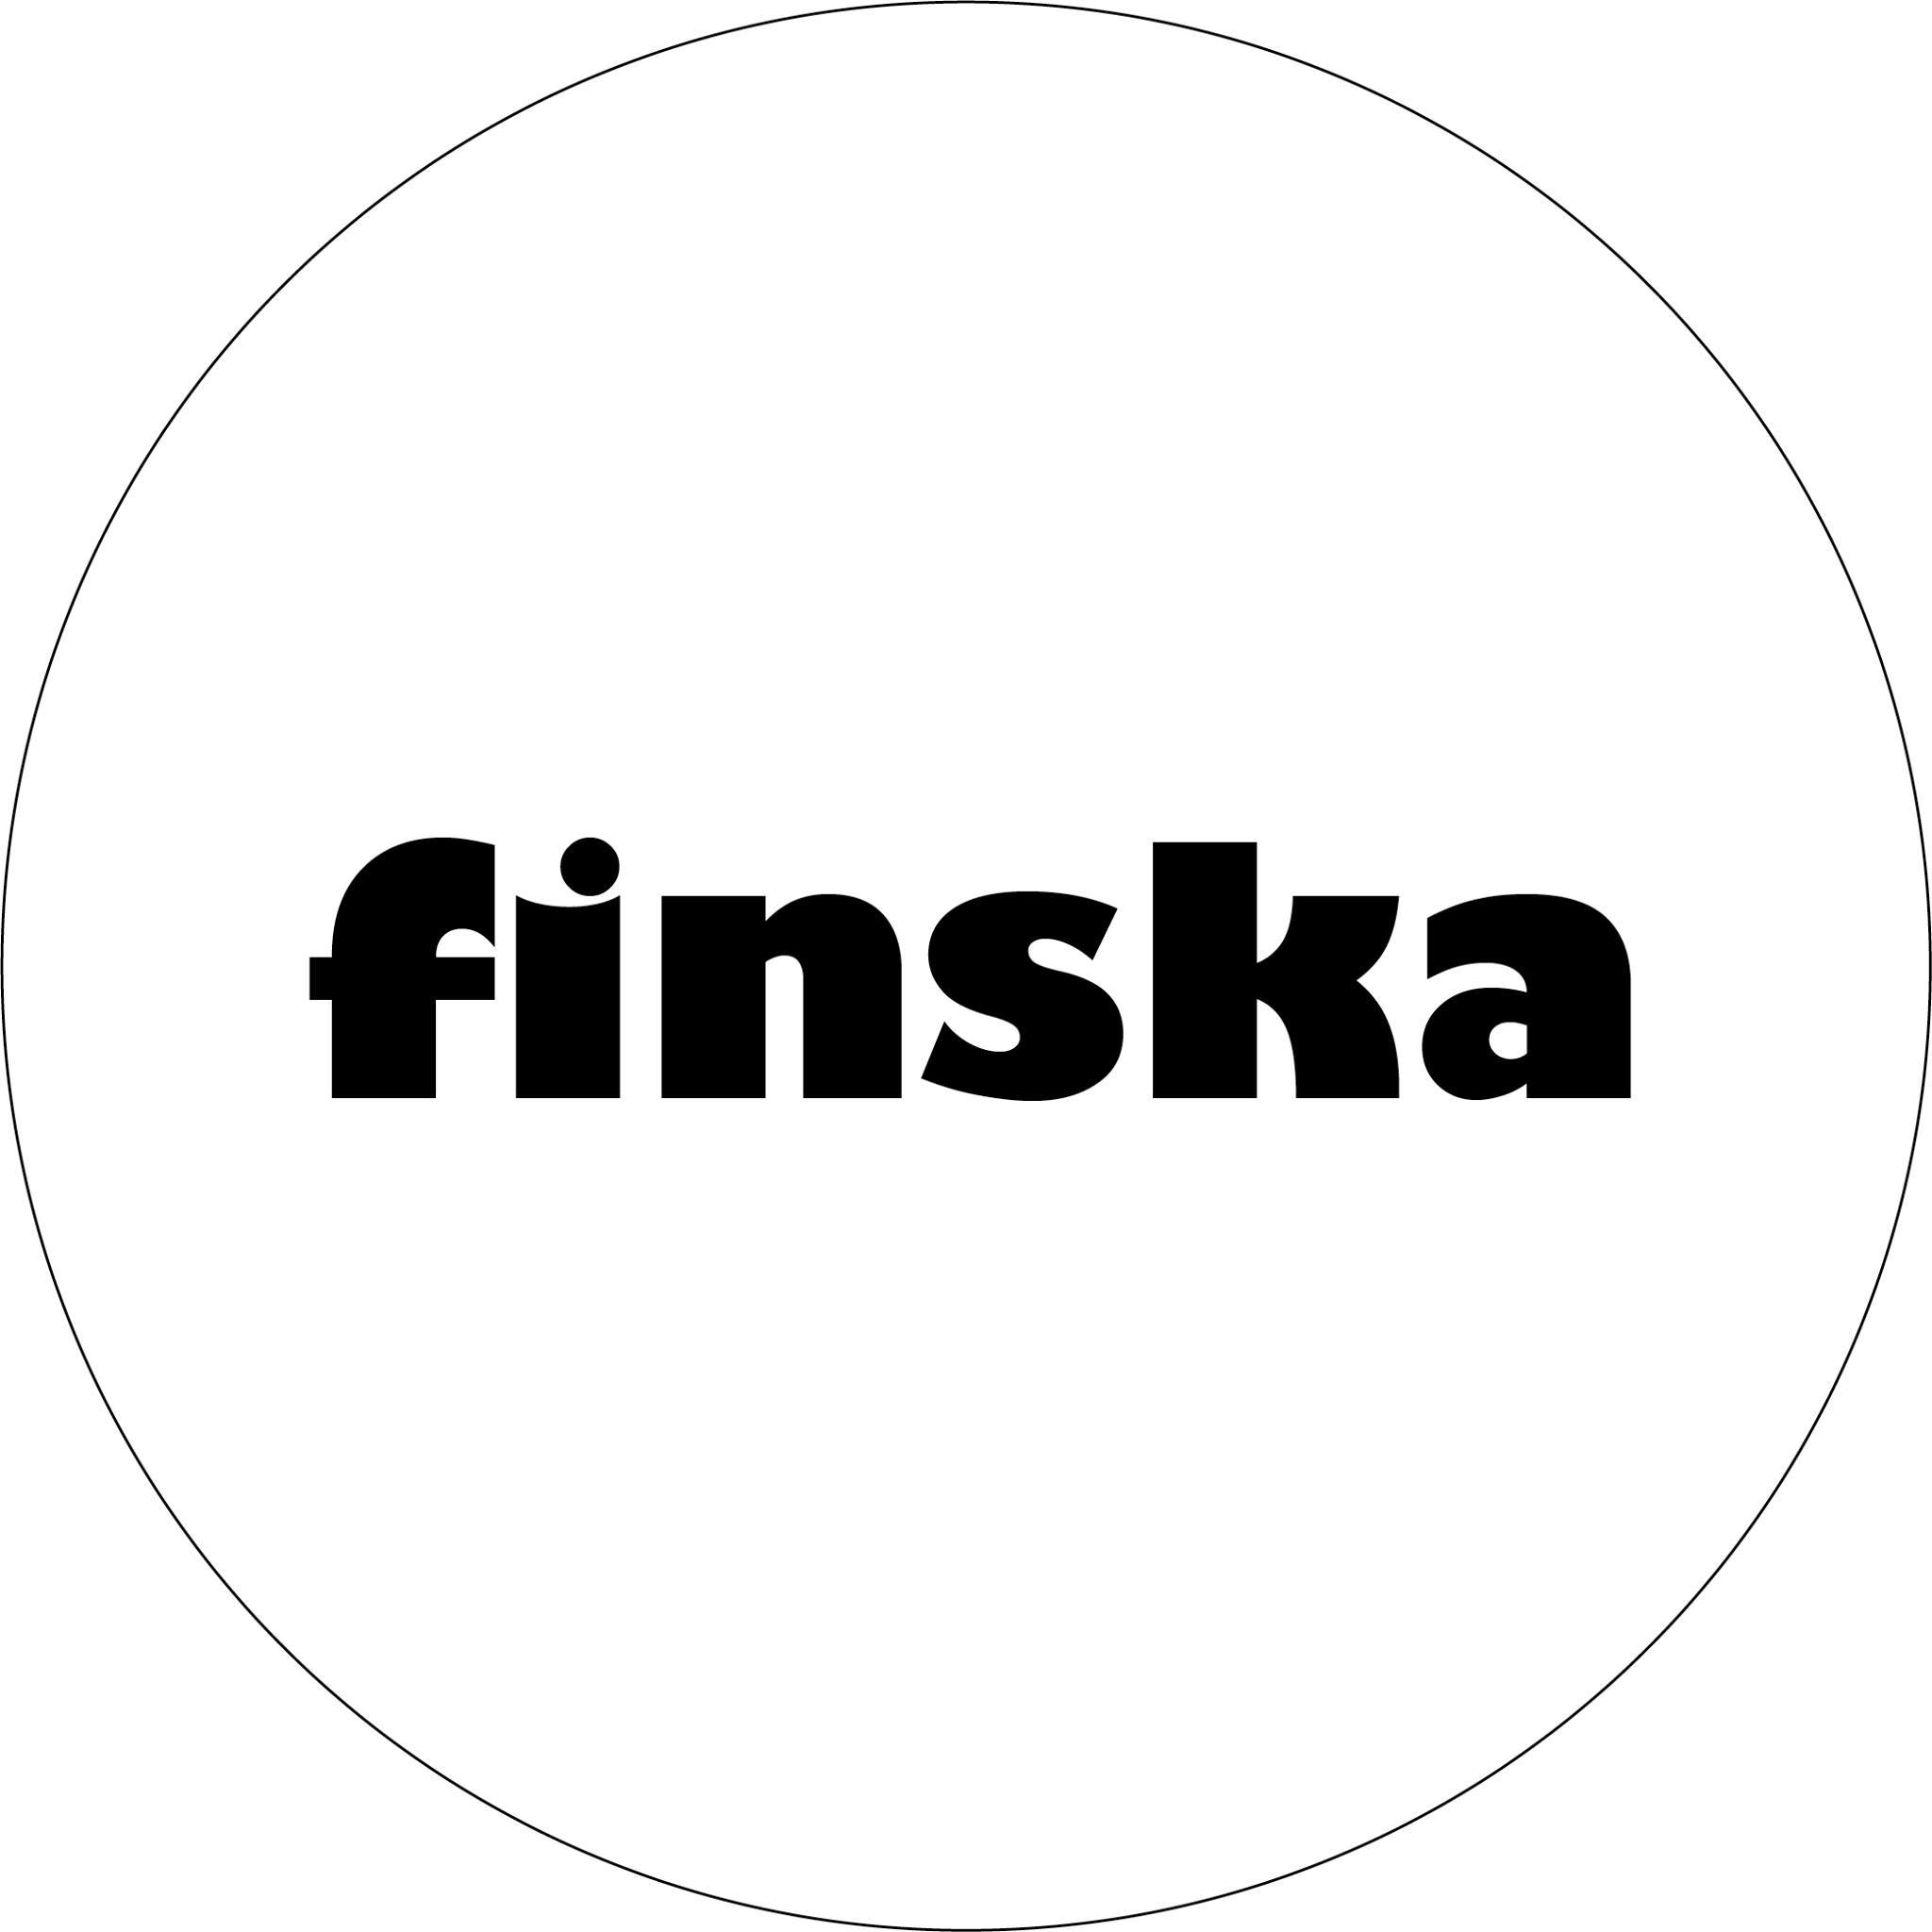 Australian Finska Championship